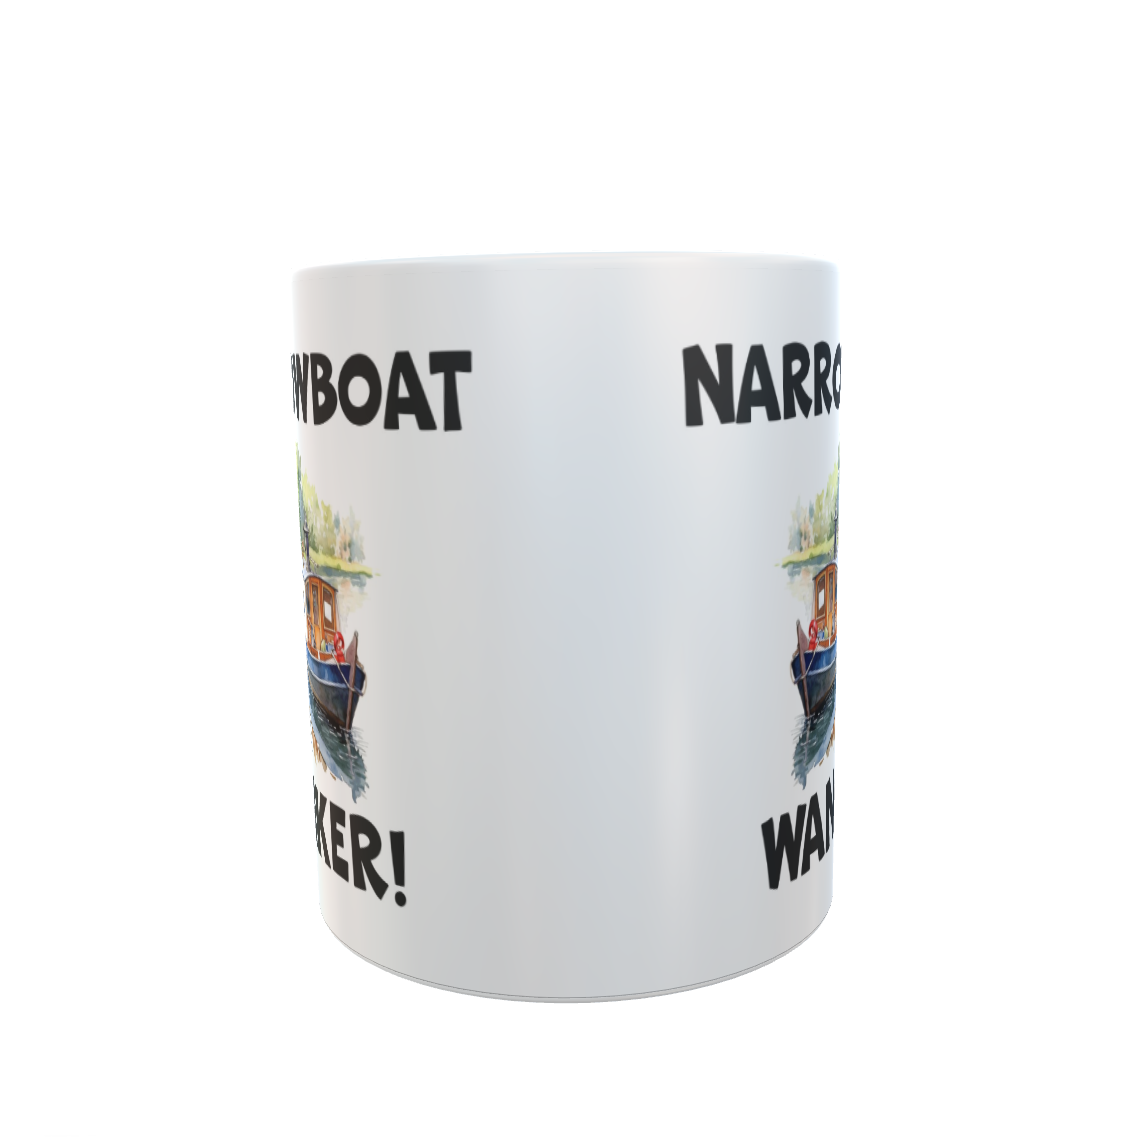 Narrowboat Wanker Mug Gift - Novelty Cute Canal Boat Rude Funny Holiday Travel Boating Vacation Cup Present